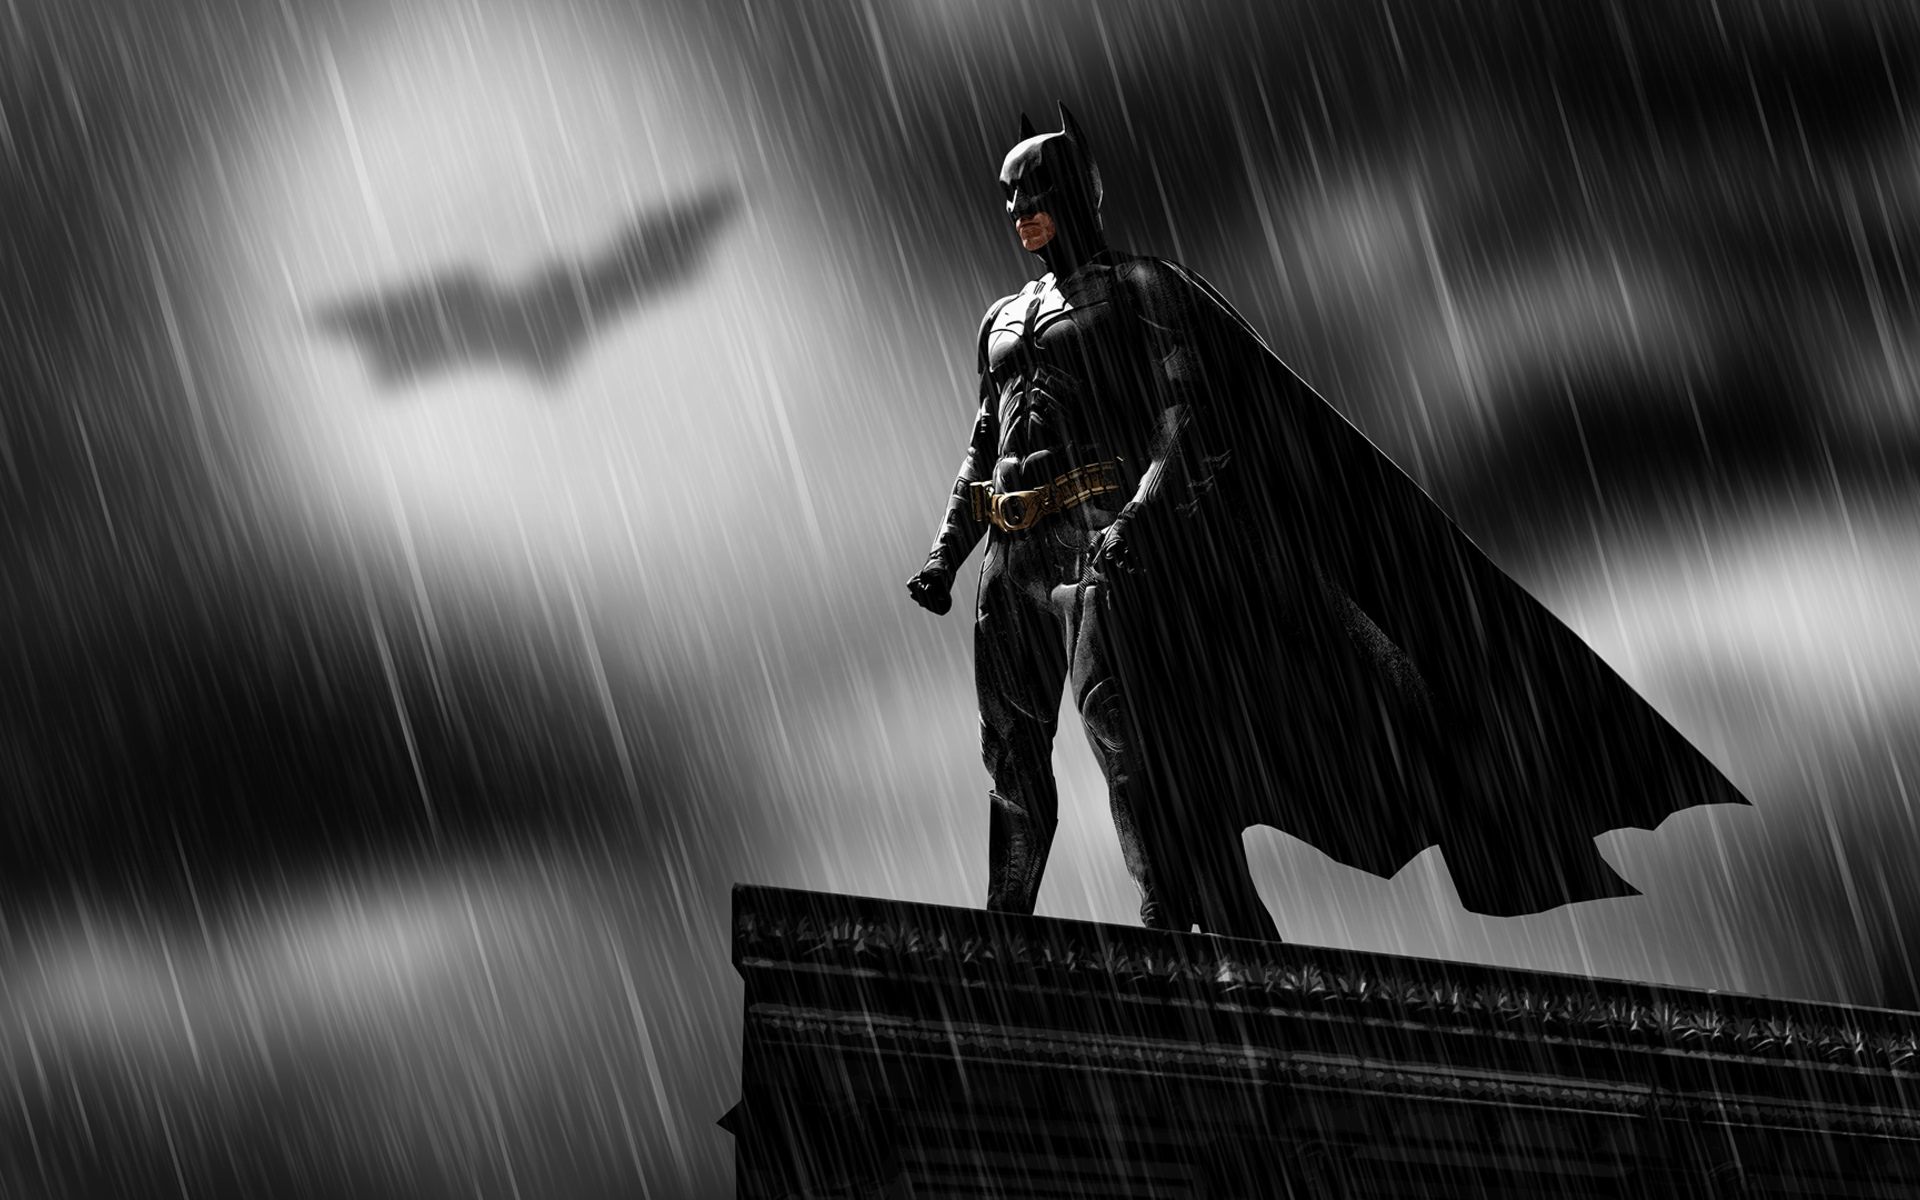 Batman Movie High Quality Wallpaper All HD